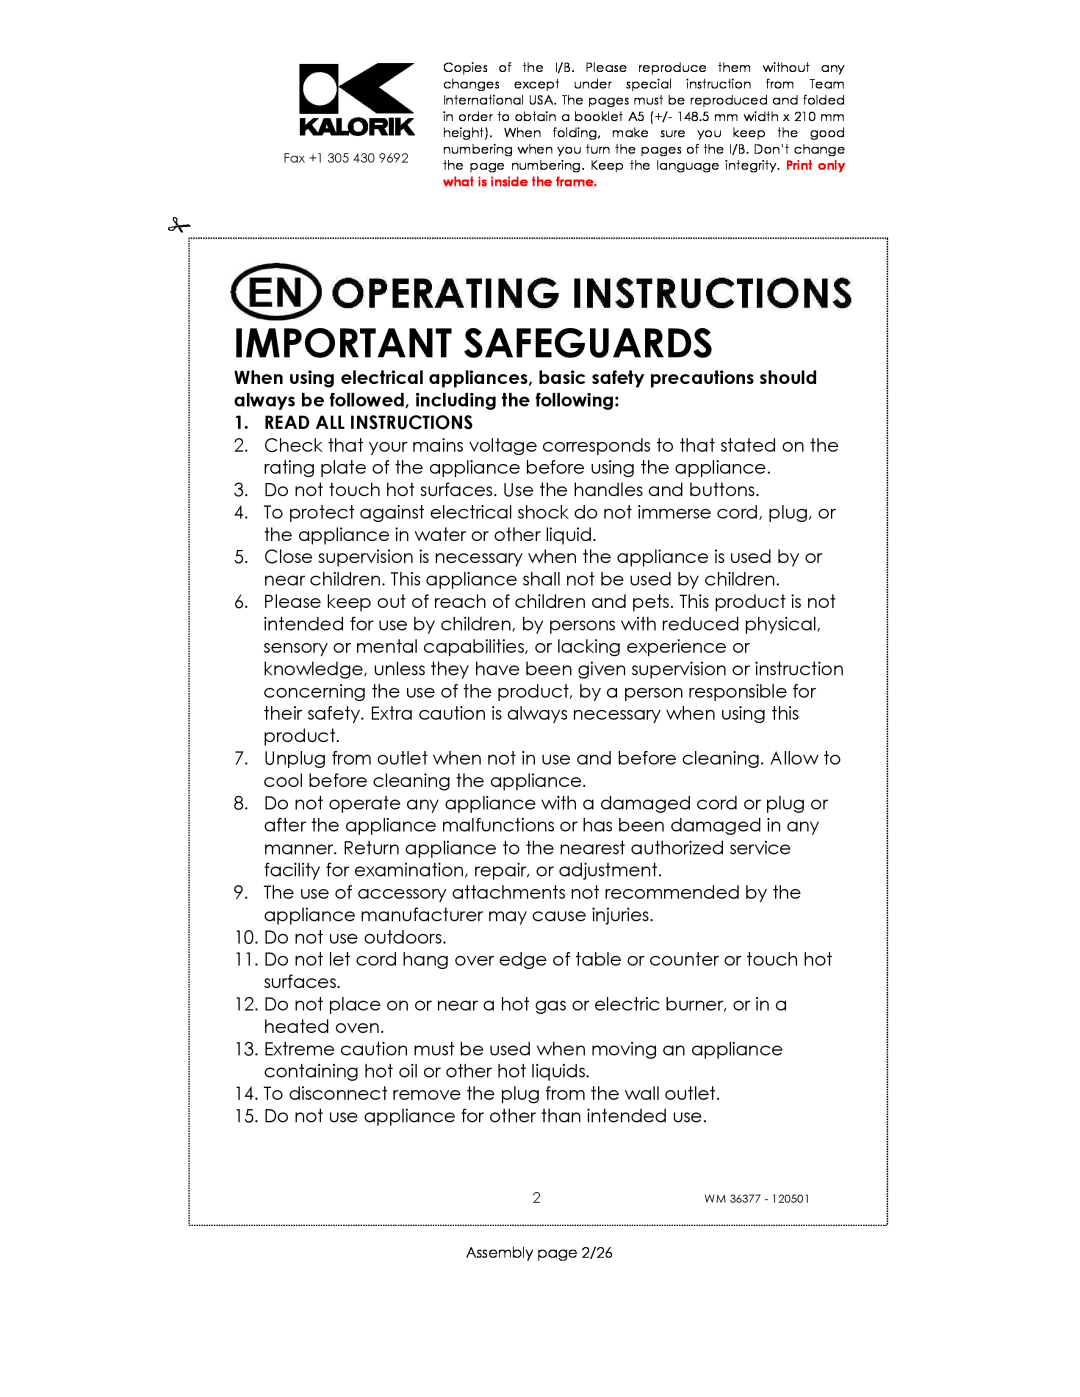 Kalorik WM 36377 manual Important Safeguards, Read All Instructions 